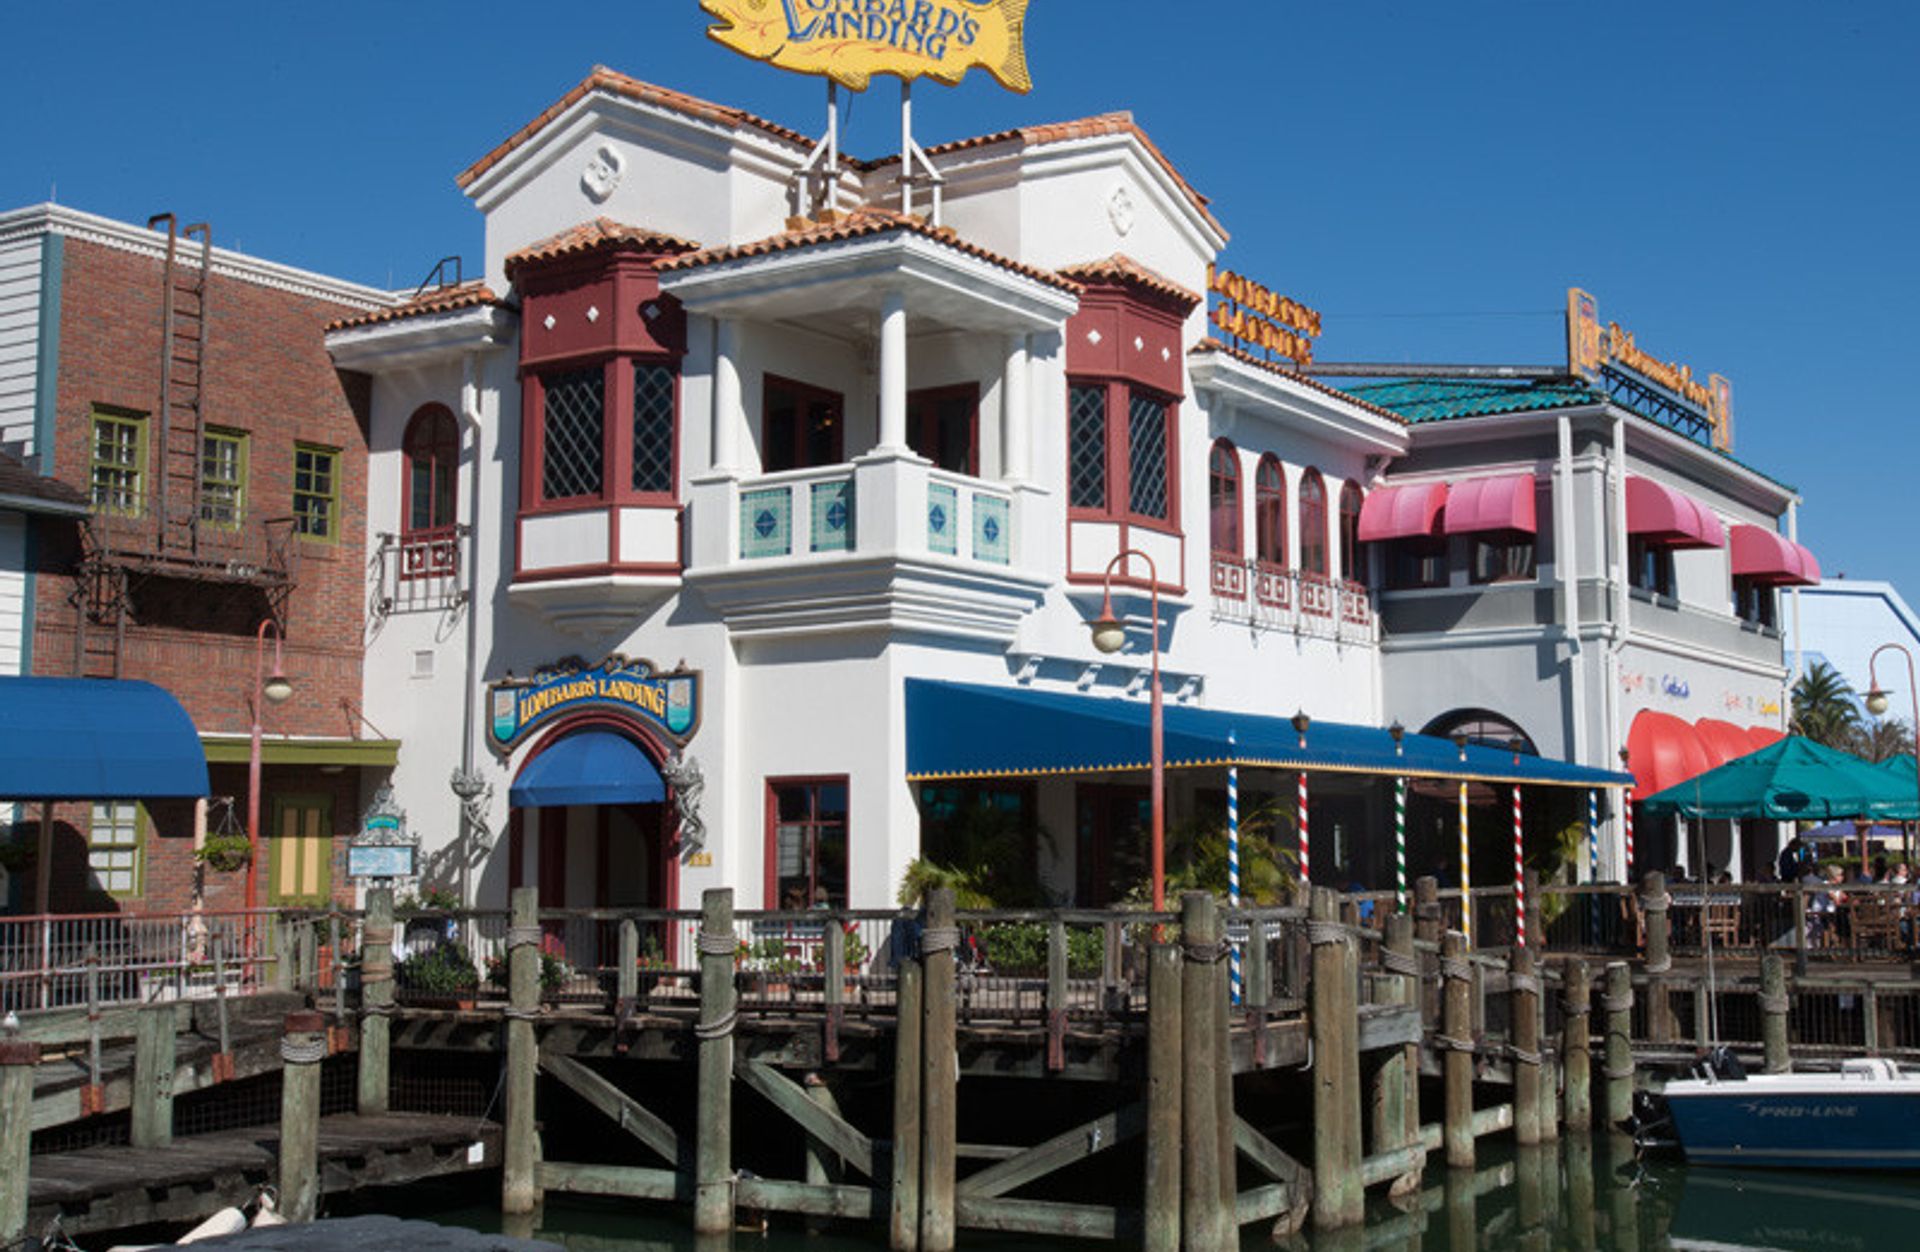 Lombard's Seafood Grille at Universal Studios Florida, Orlando, FL